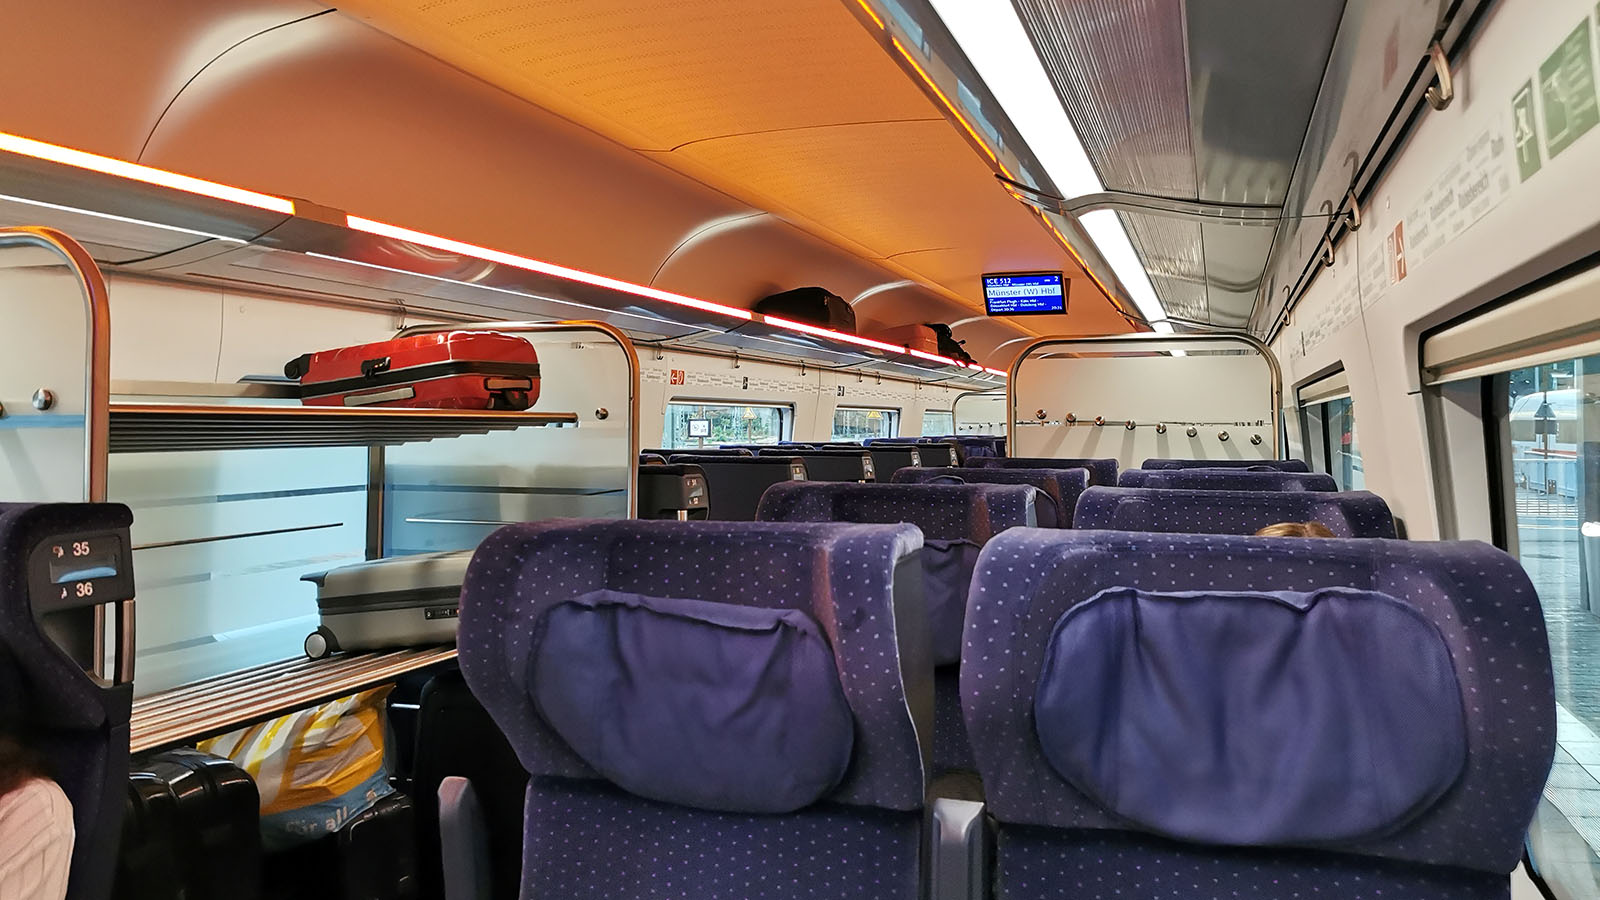 Onboard ICE train with Deutsche Bahn